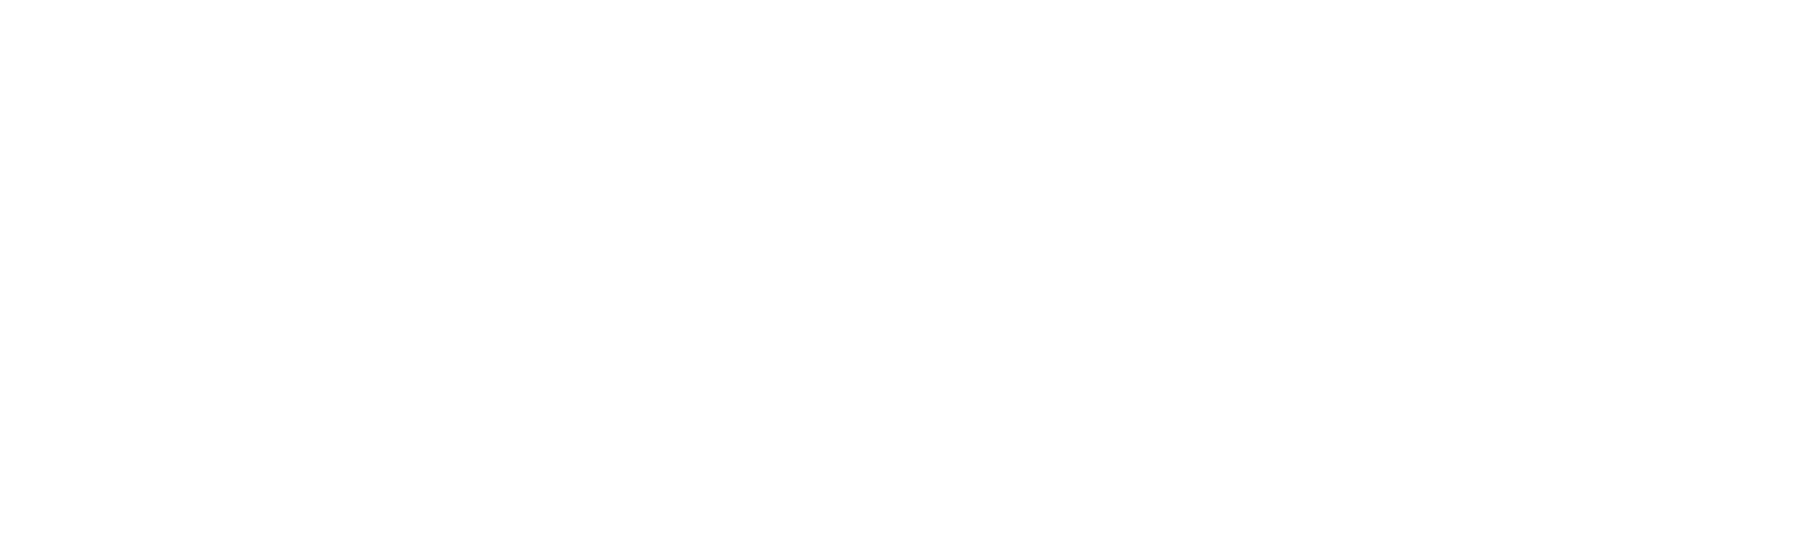 logo de l'ONU Geneve